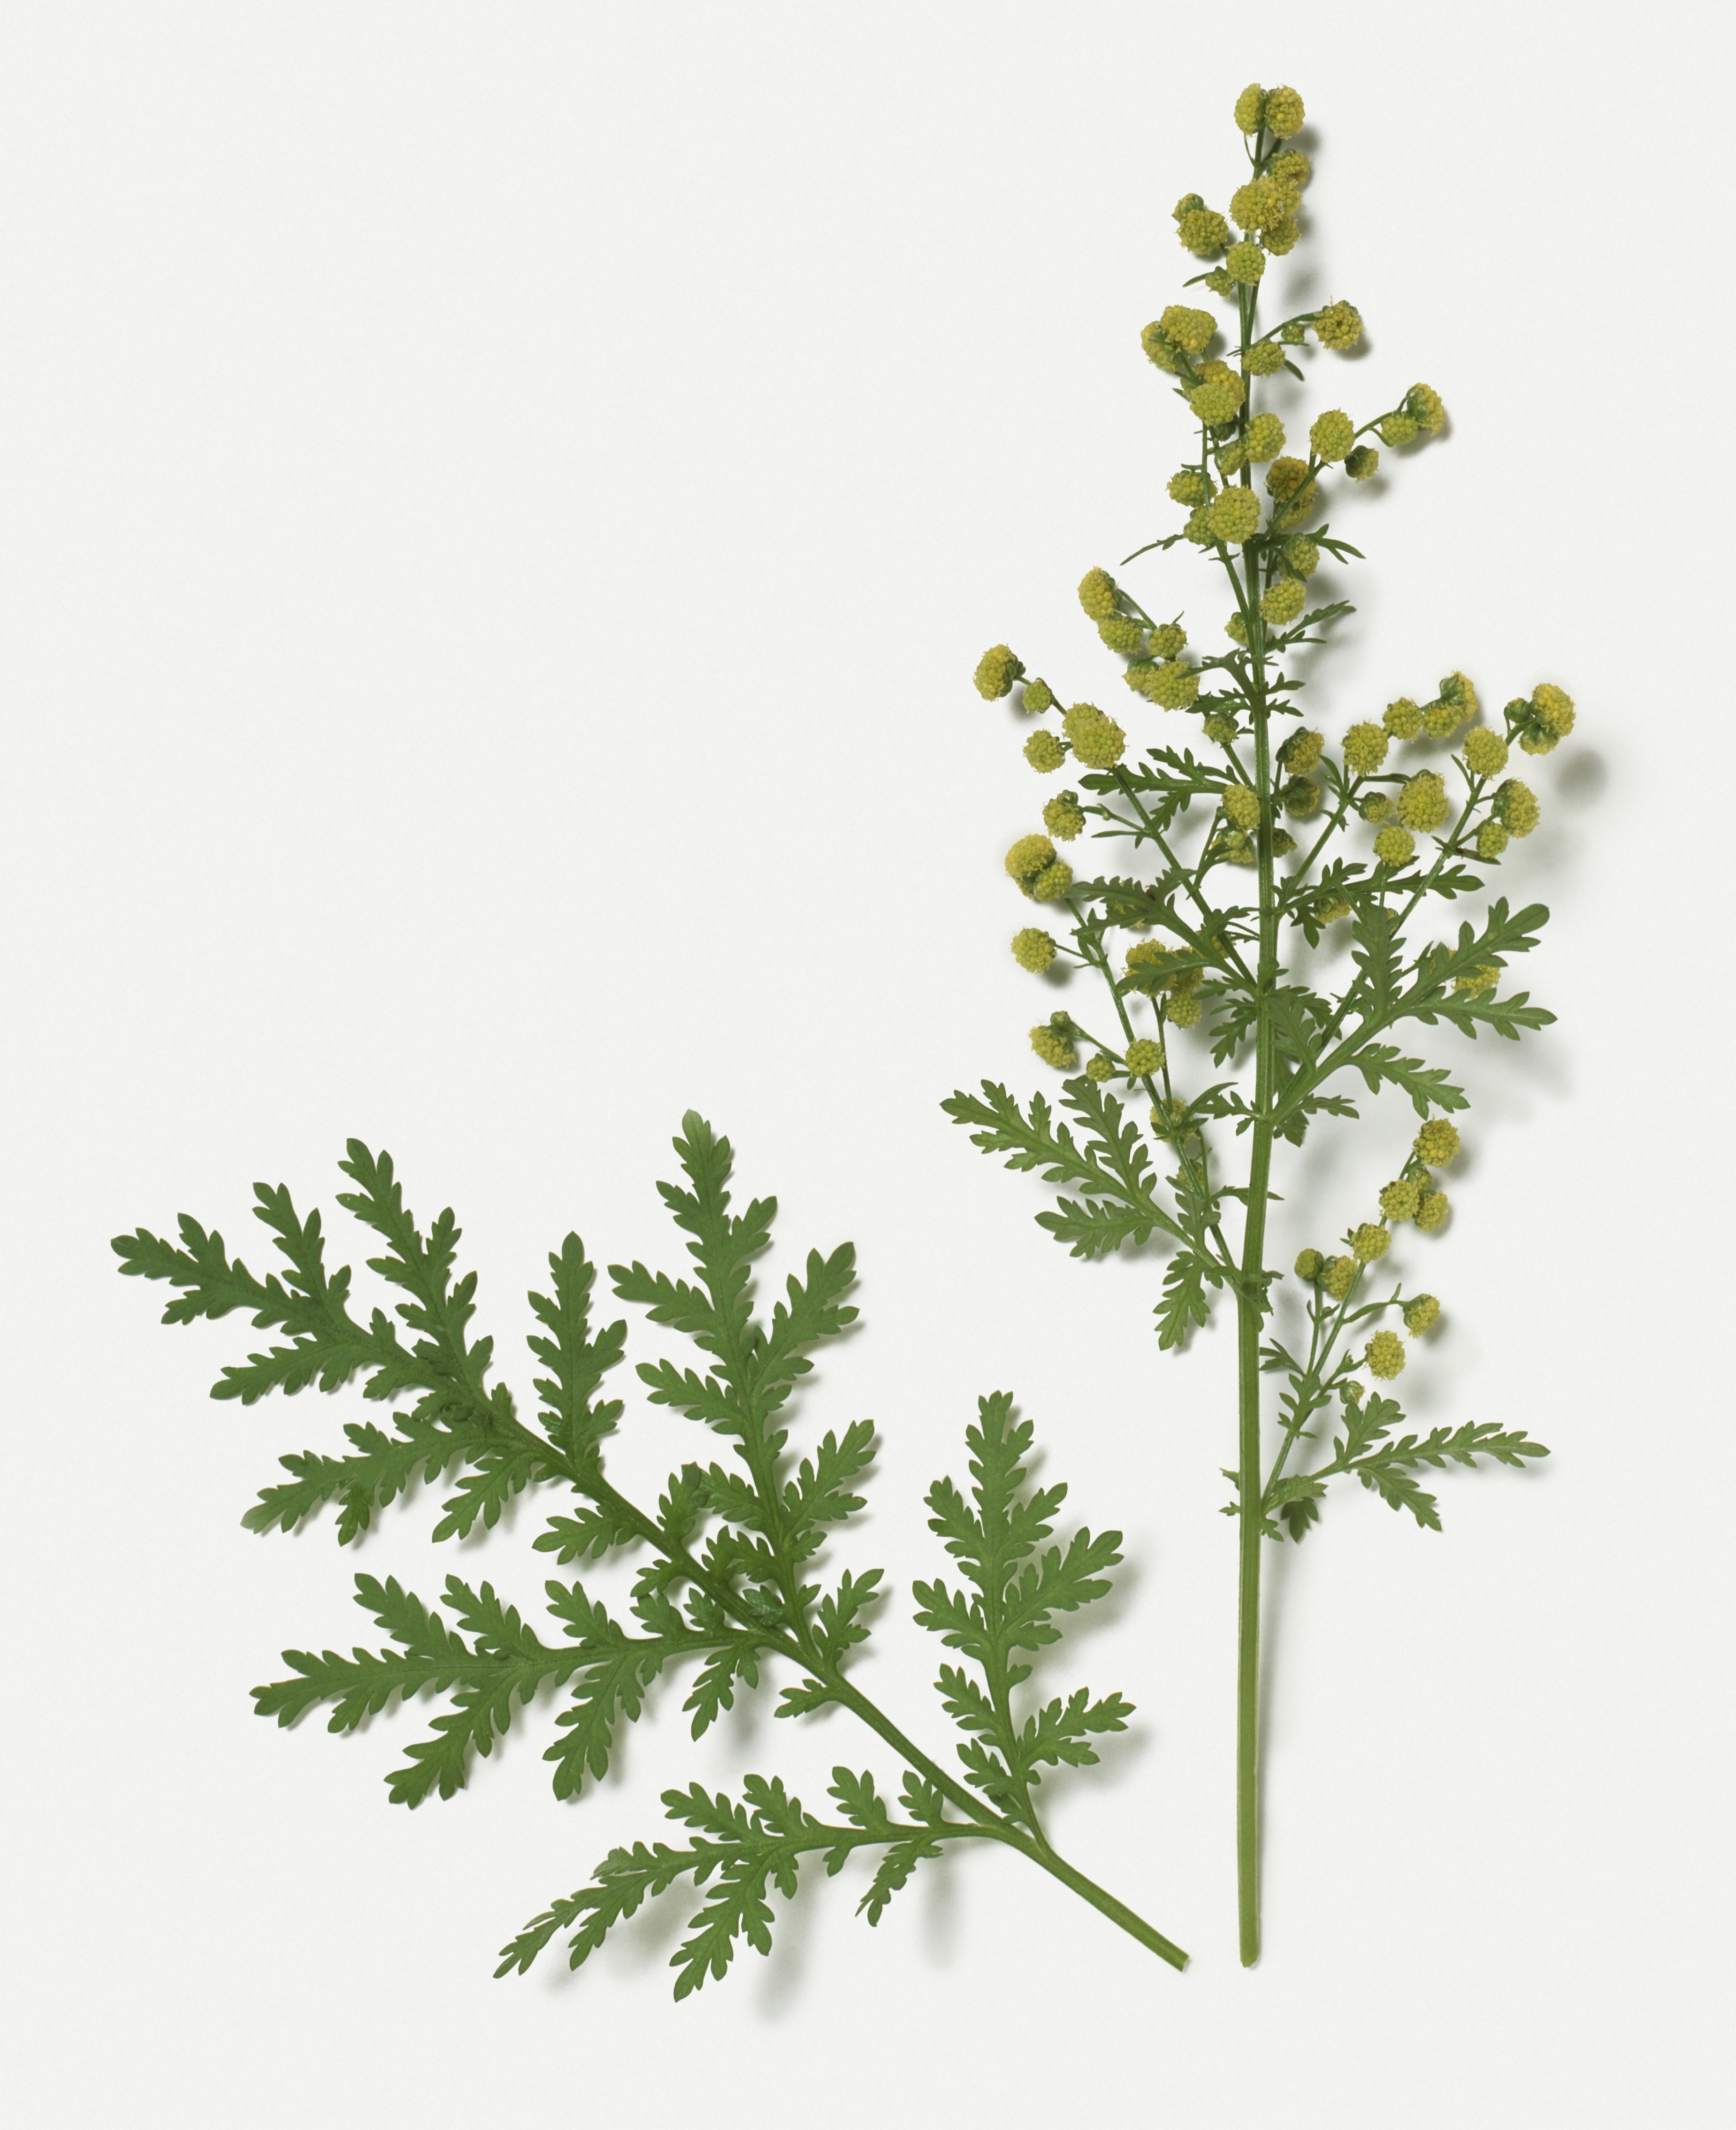 Artemisia annua (Getty Images)